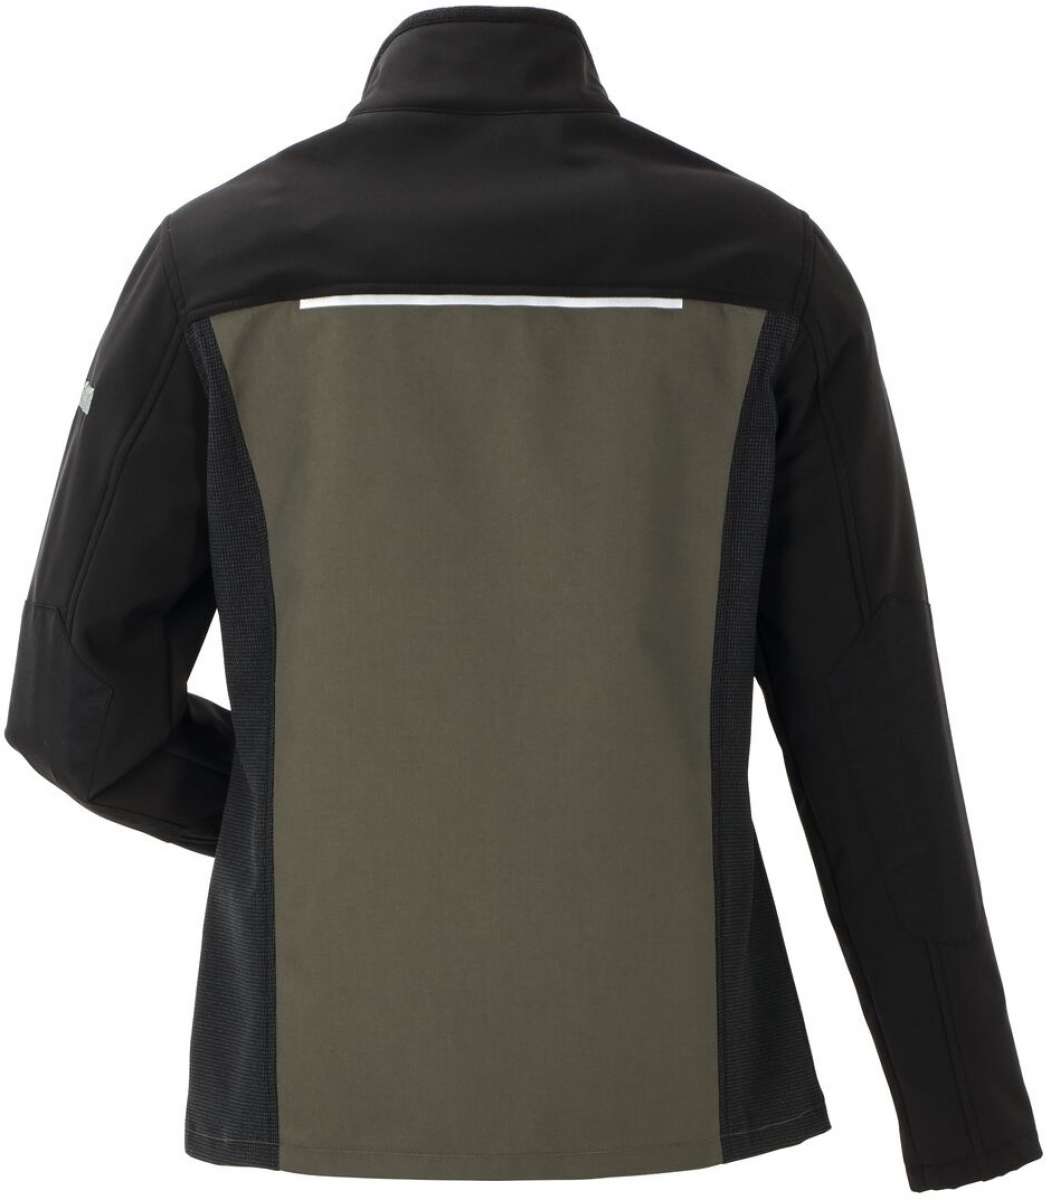 PLANAM-Workwear, Damen-Hybridjacke, Norit, 245 g/m, oliv/schwarz